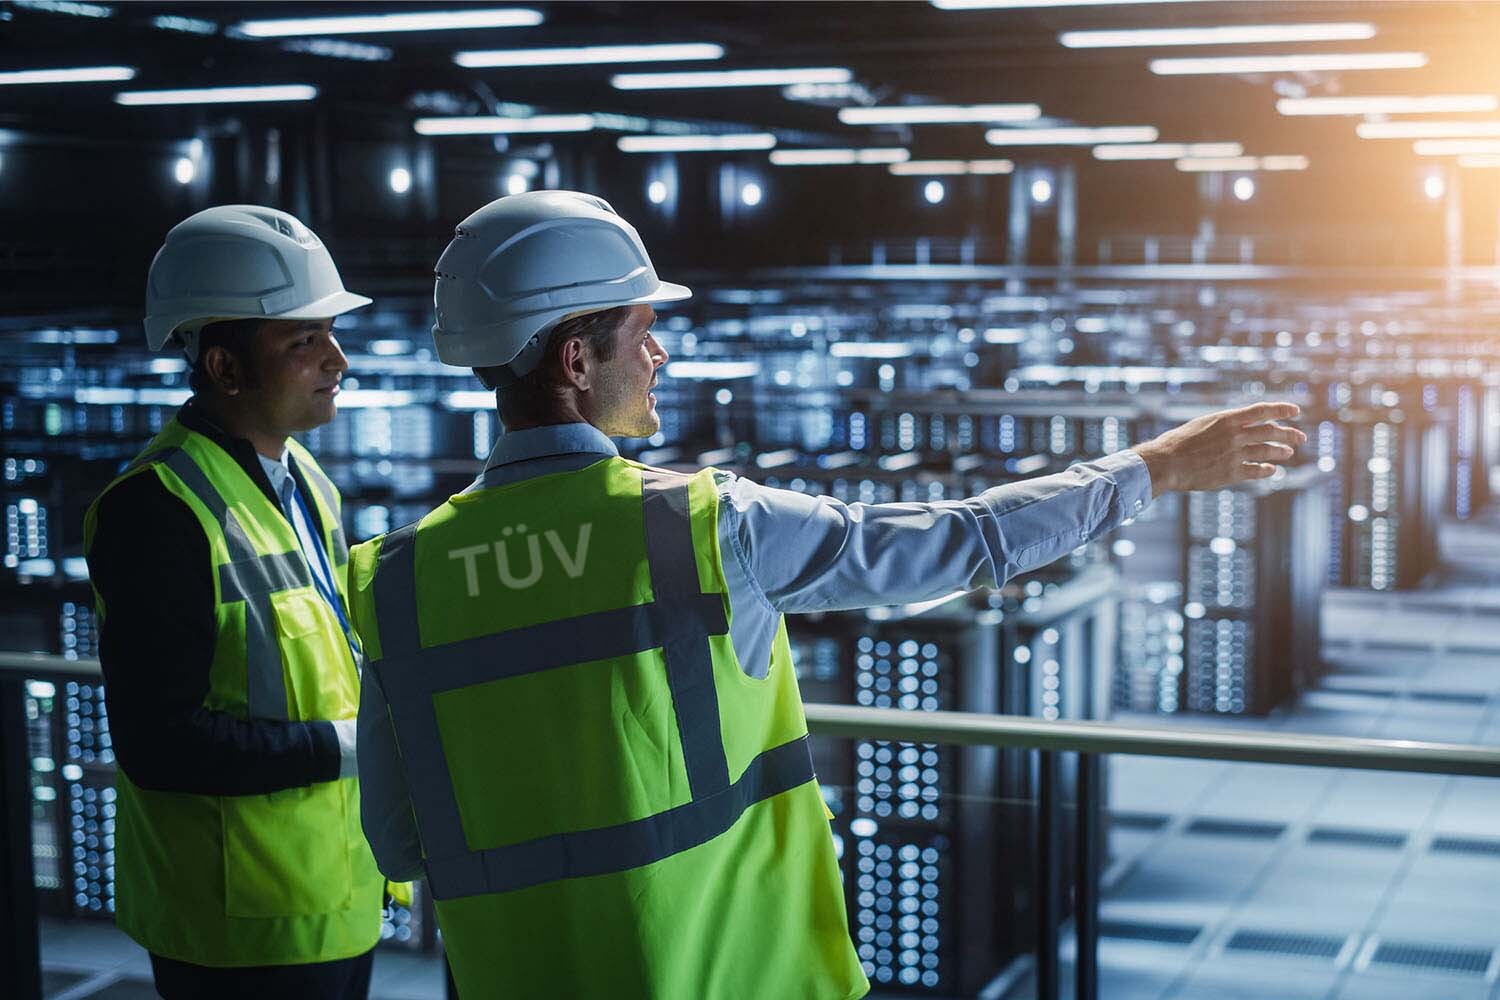 Efficient and secure data center: TÜV certification according to DIN EN 50600